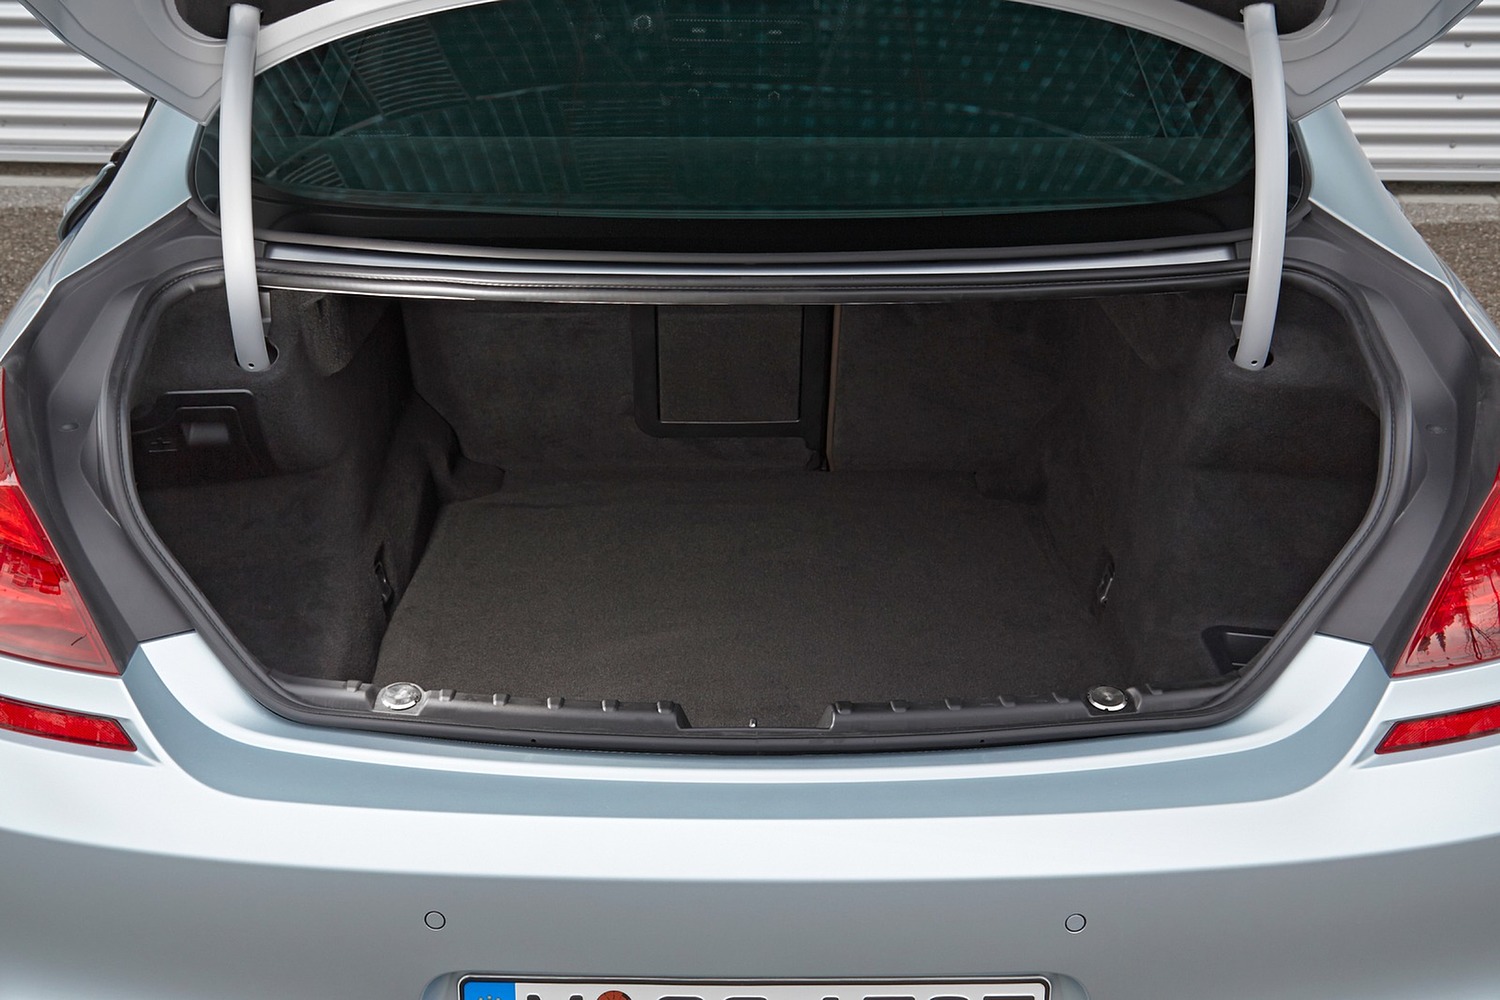 BMW M6 Gran Coupe Sedan Cargo Area (2017 model year shown)